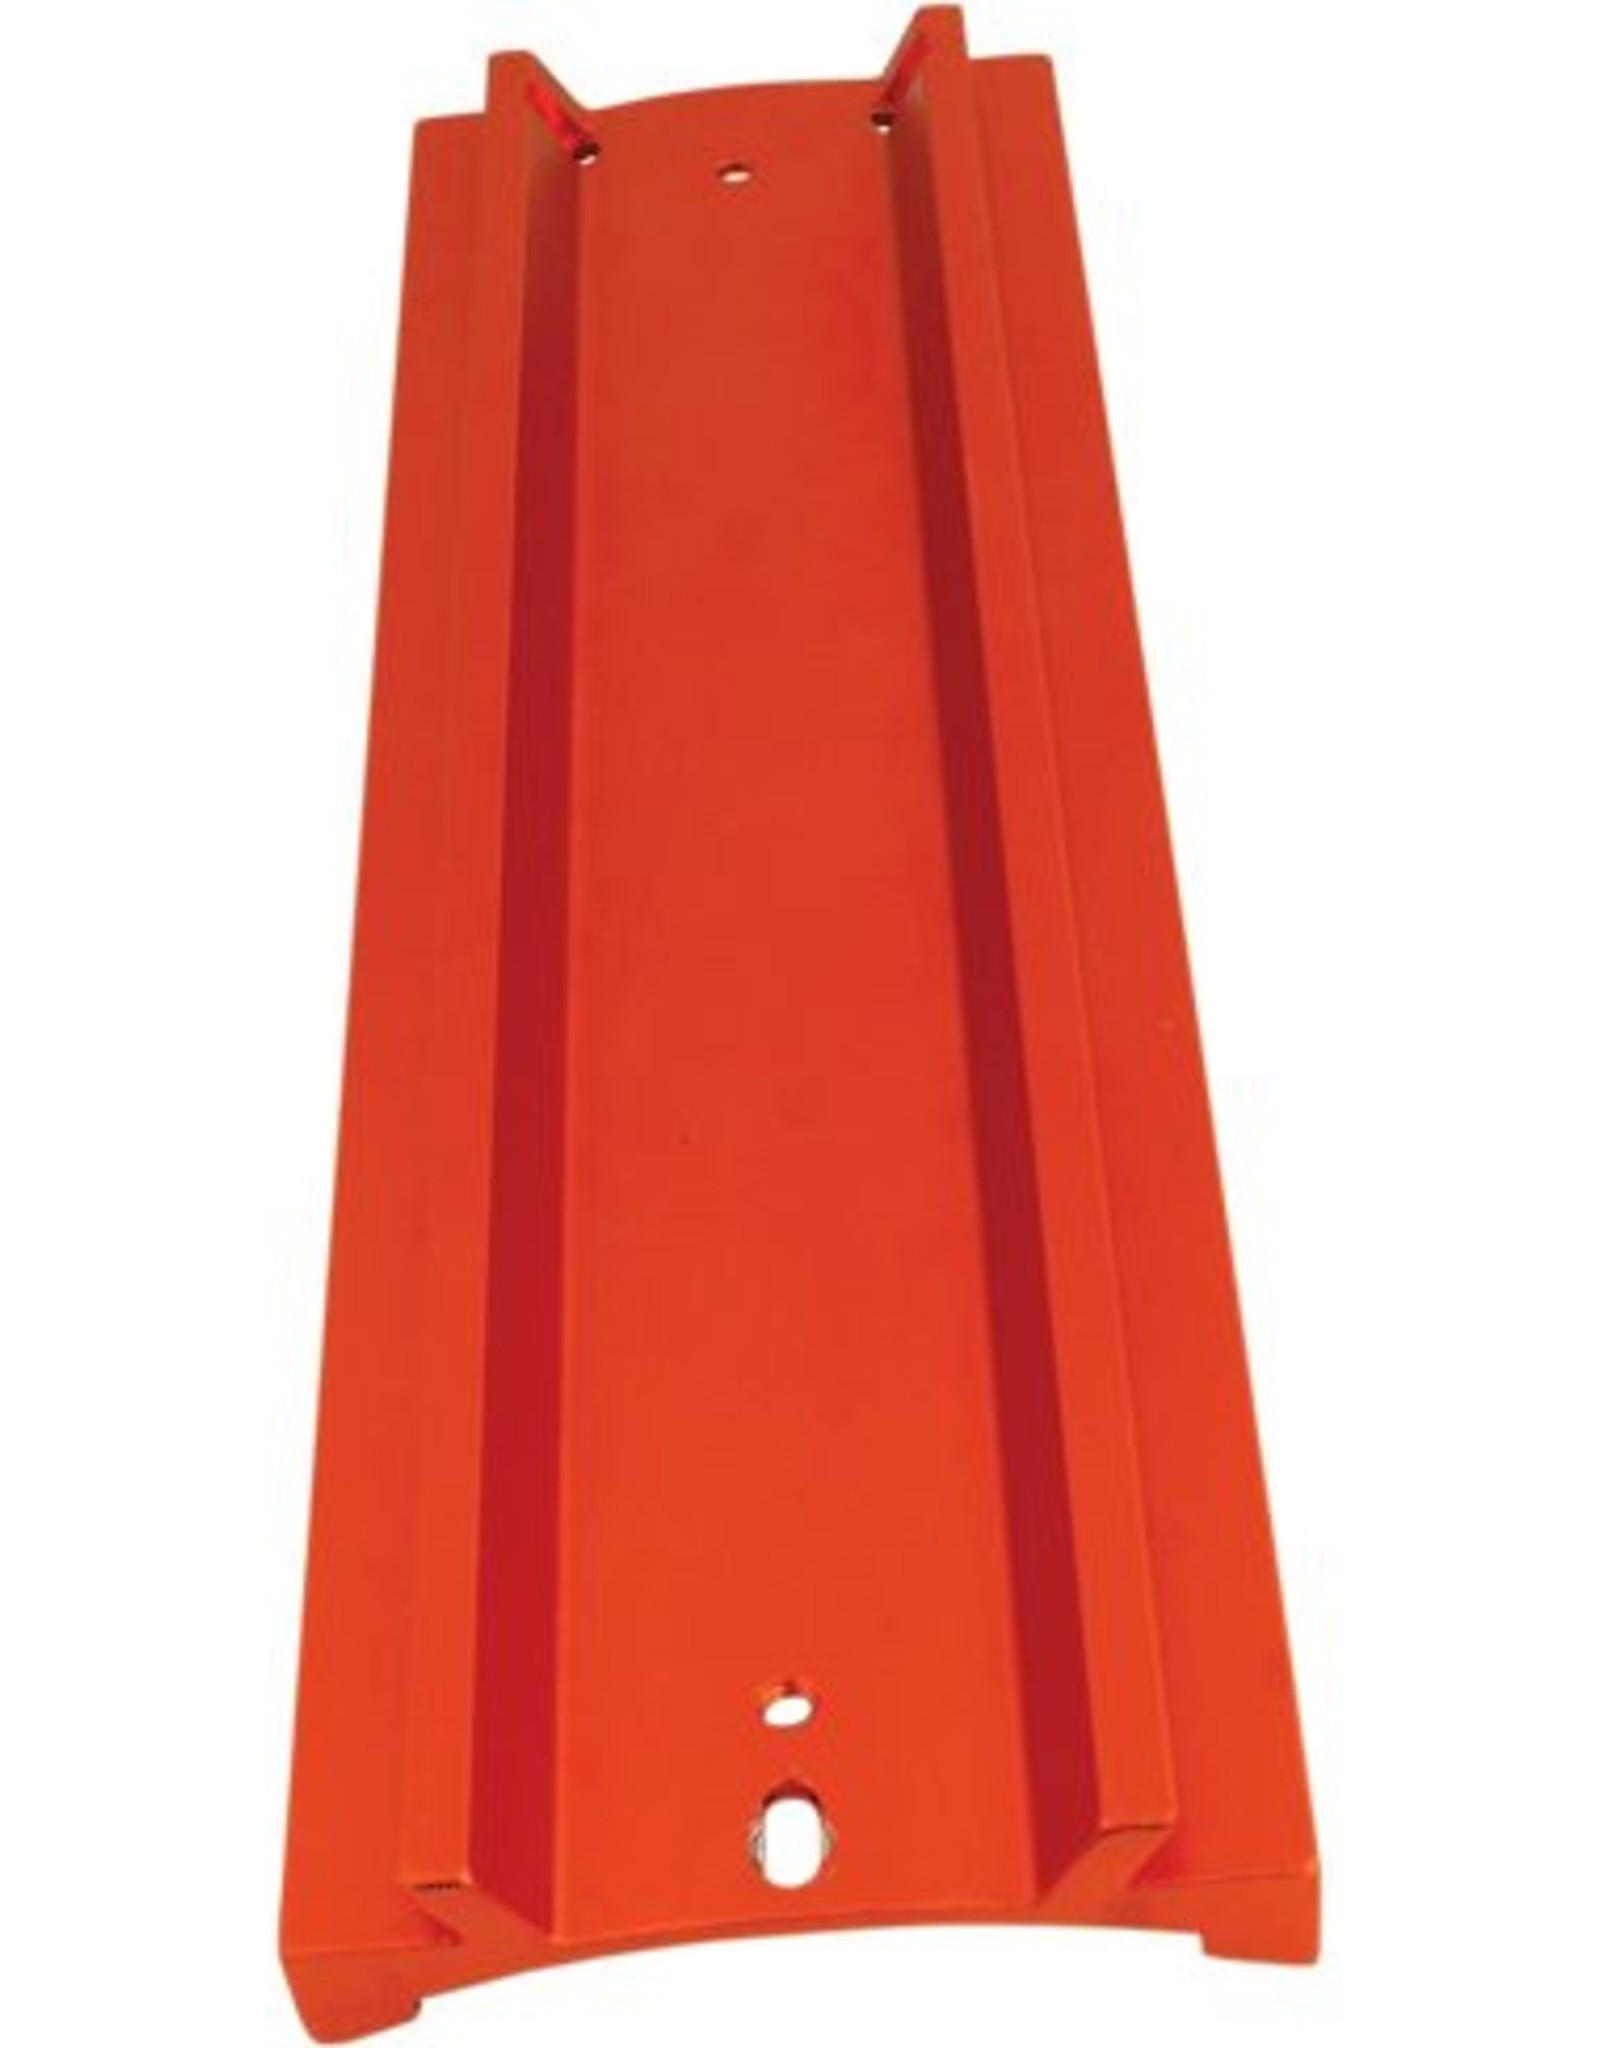 Celestron Celestron 8-inch Dovetail bar (CGEM/CGX)